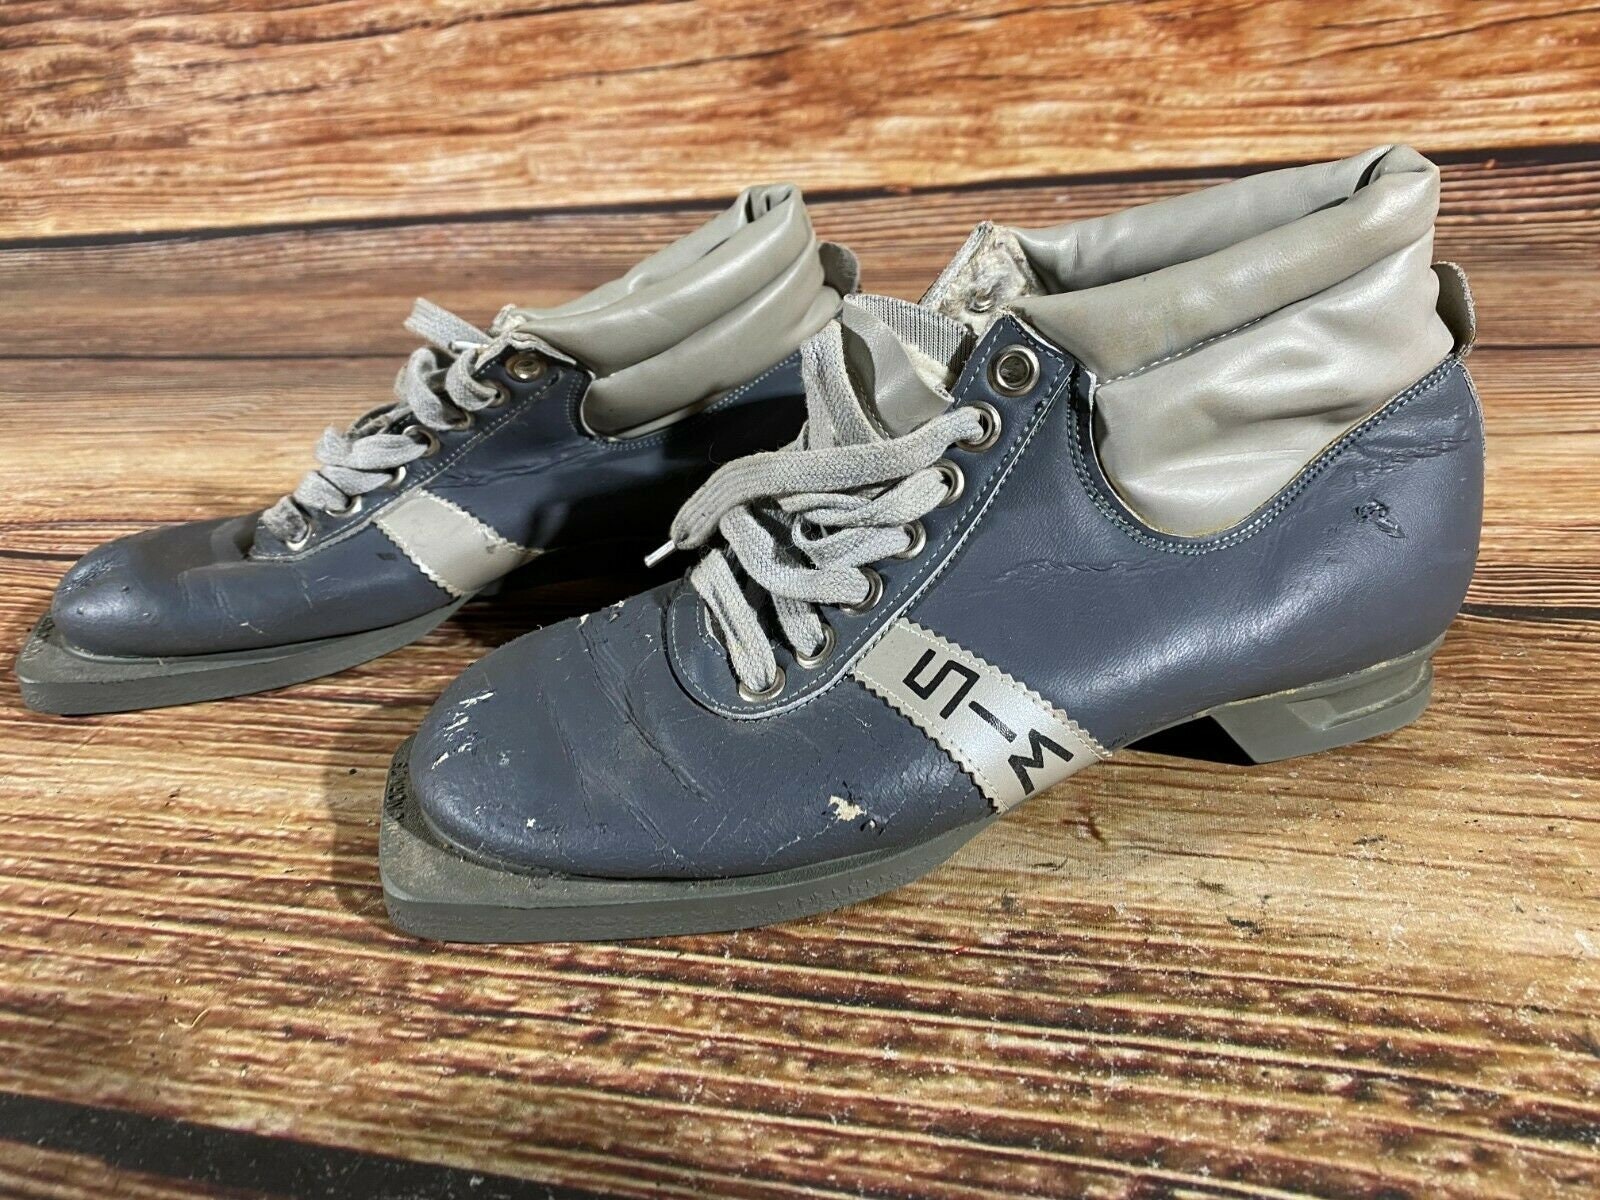 Shoes Boys Shoes Boots Little Norway Retro Vintage Nordic Norm Ski Boots Size Eu39 Us7 Nn 75Mm 